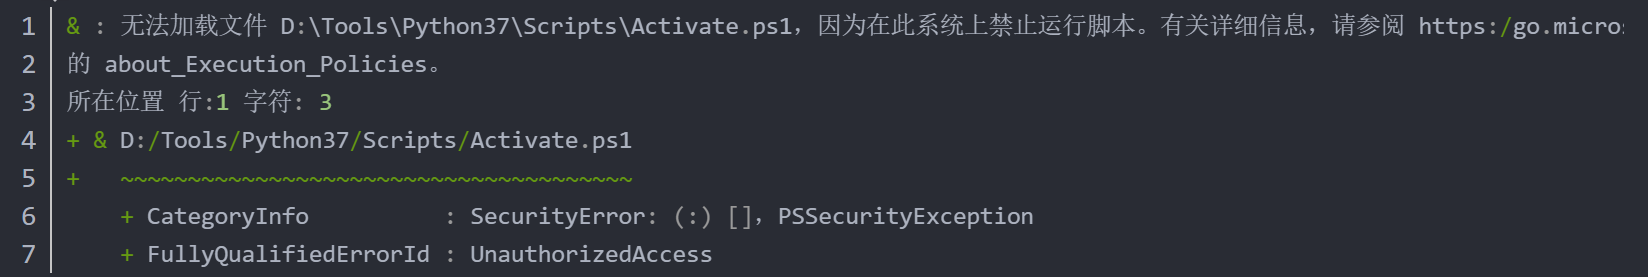 Pycharm无法加载文件 xx\Scripts\Activate.ps1，因为在此系统上禁止运行脚本